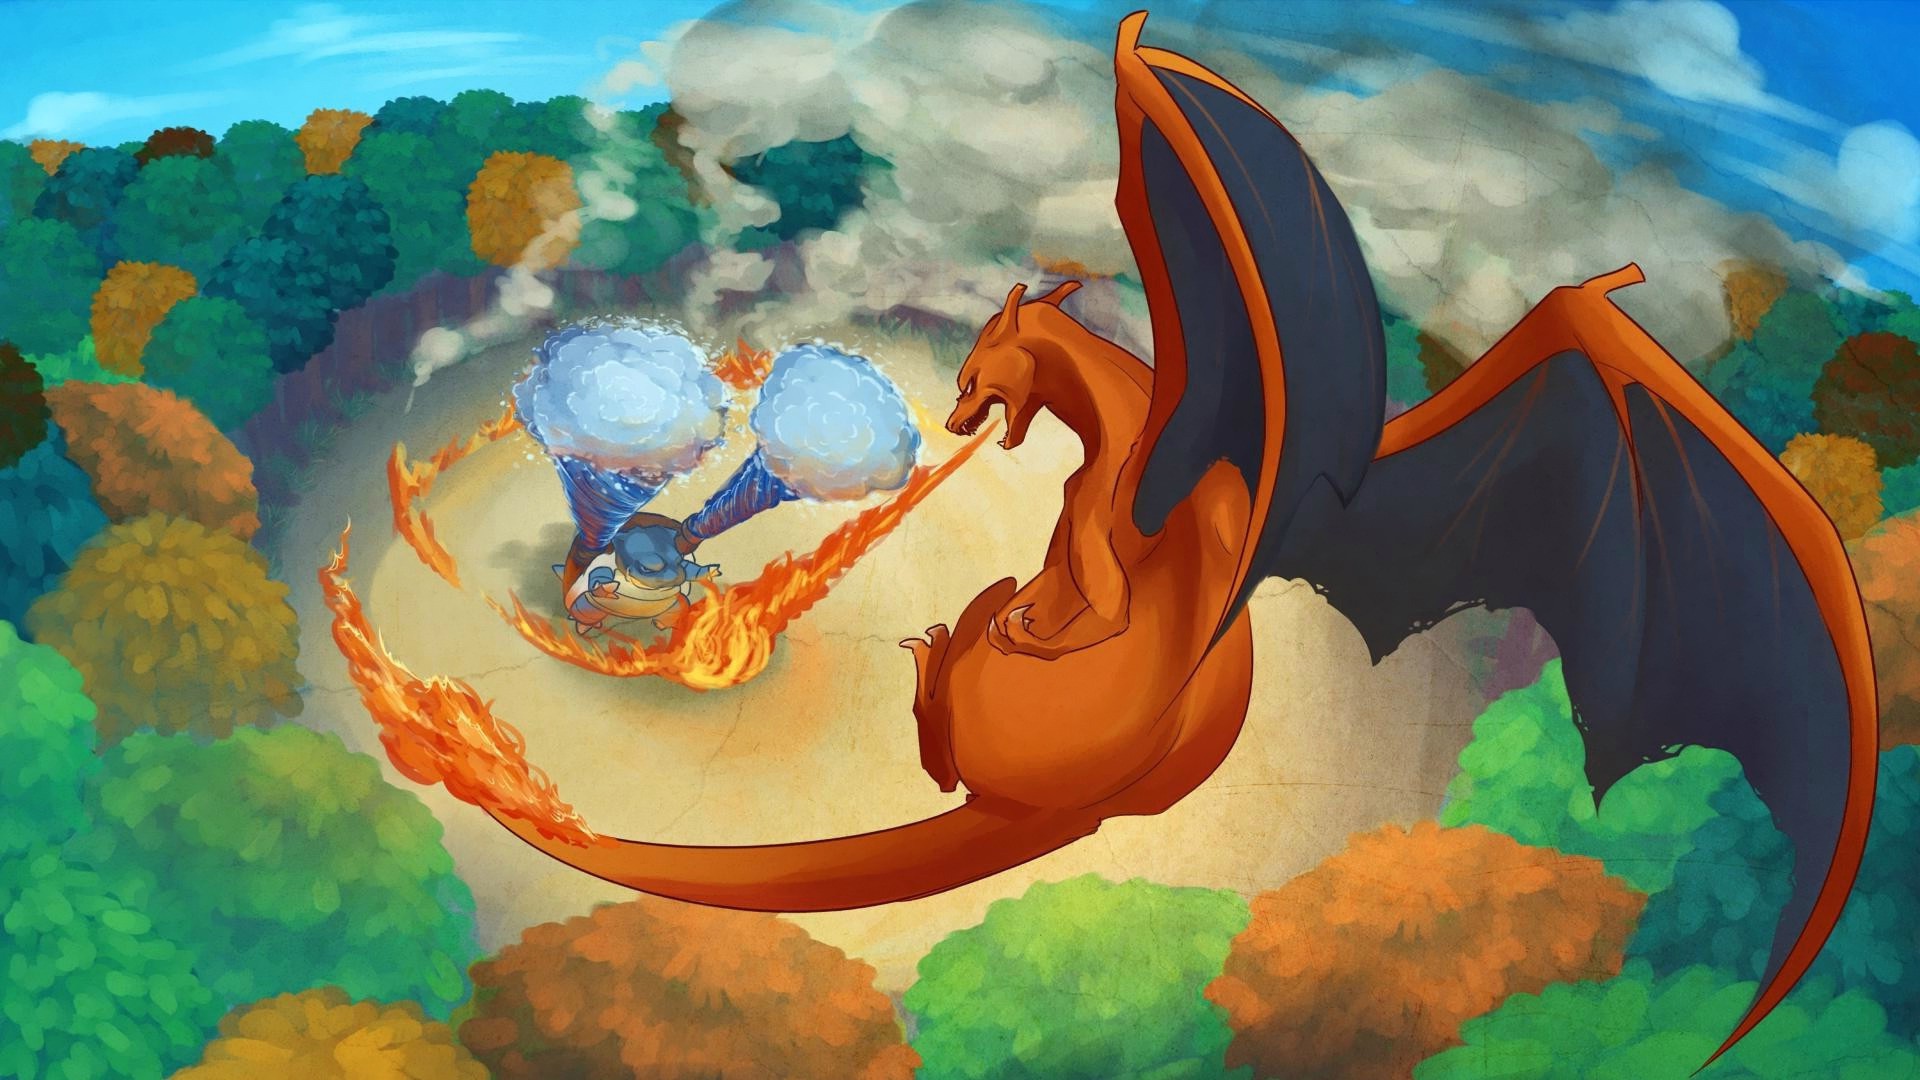 General 1920x1080 Pokémon Charizard Blastoise artwork fantasy art fire dragon water anime creature wings burning digital art